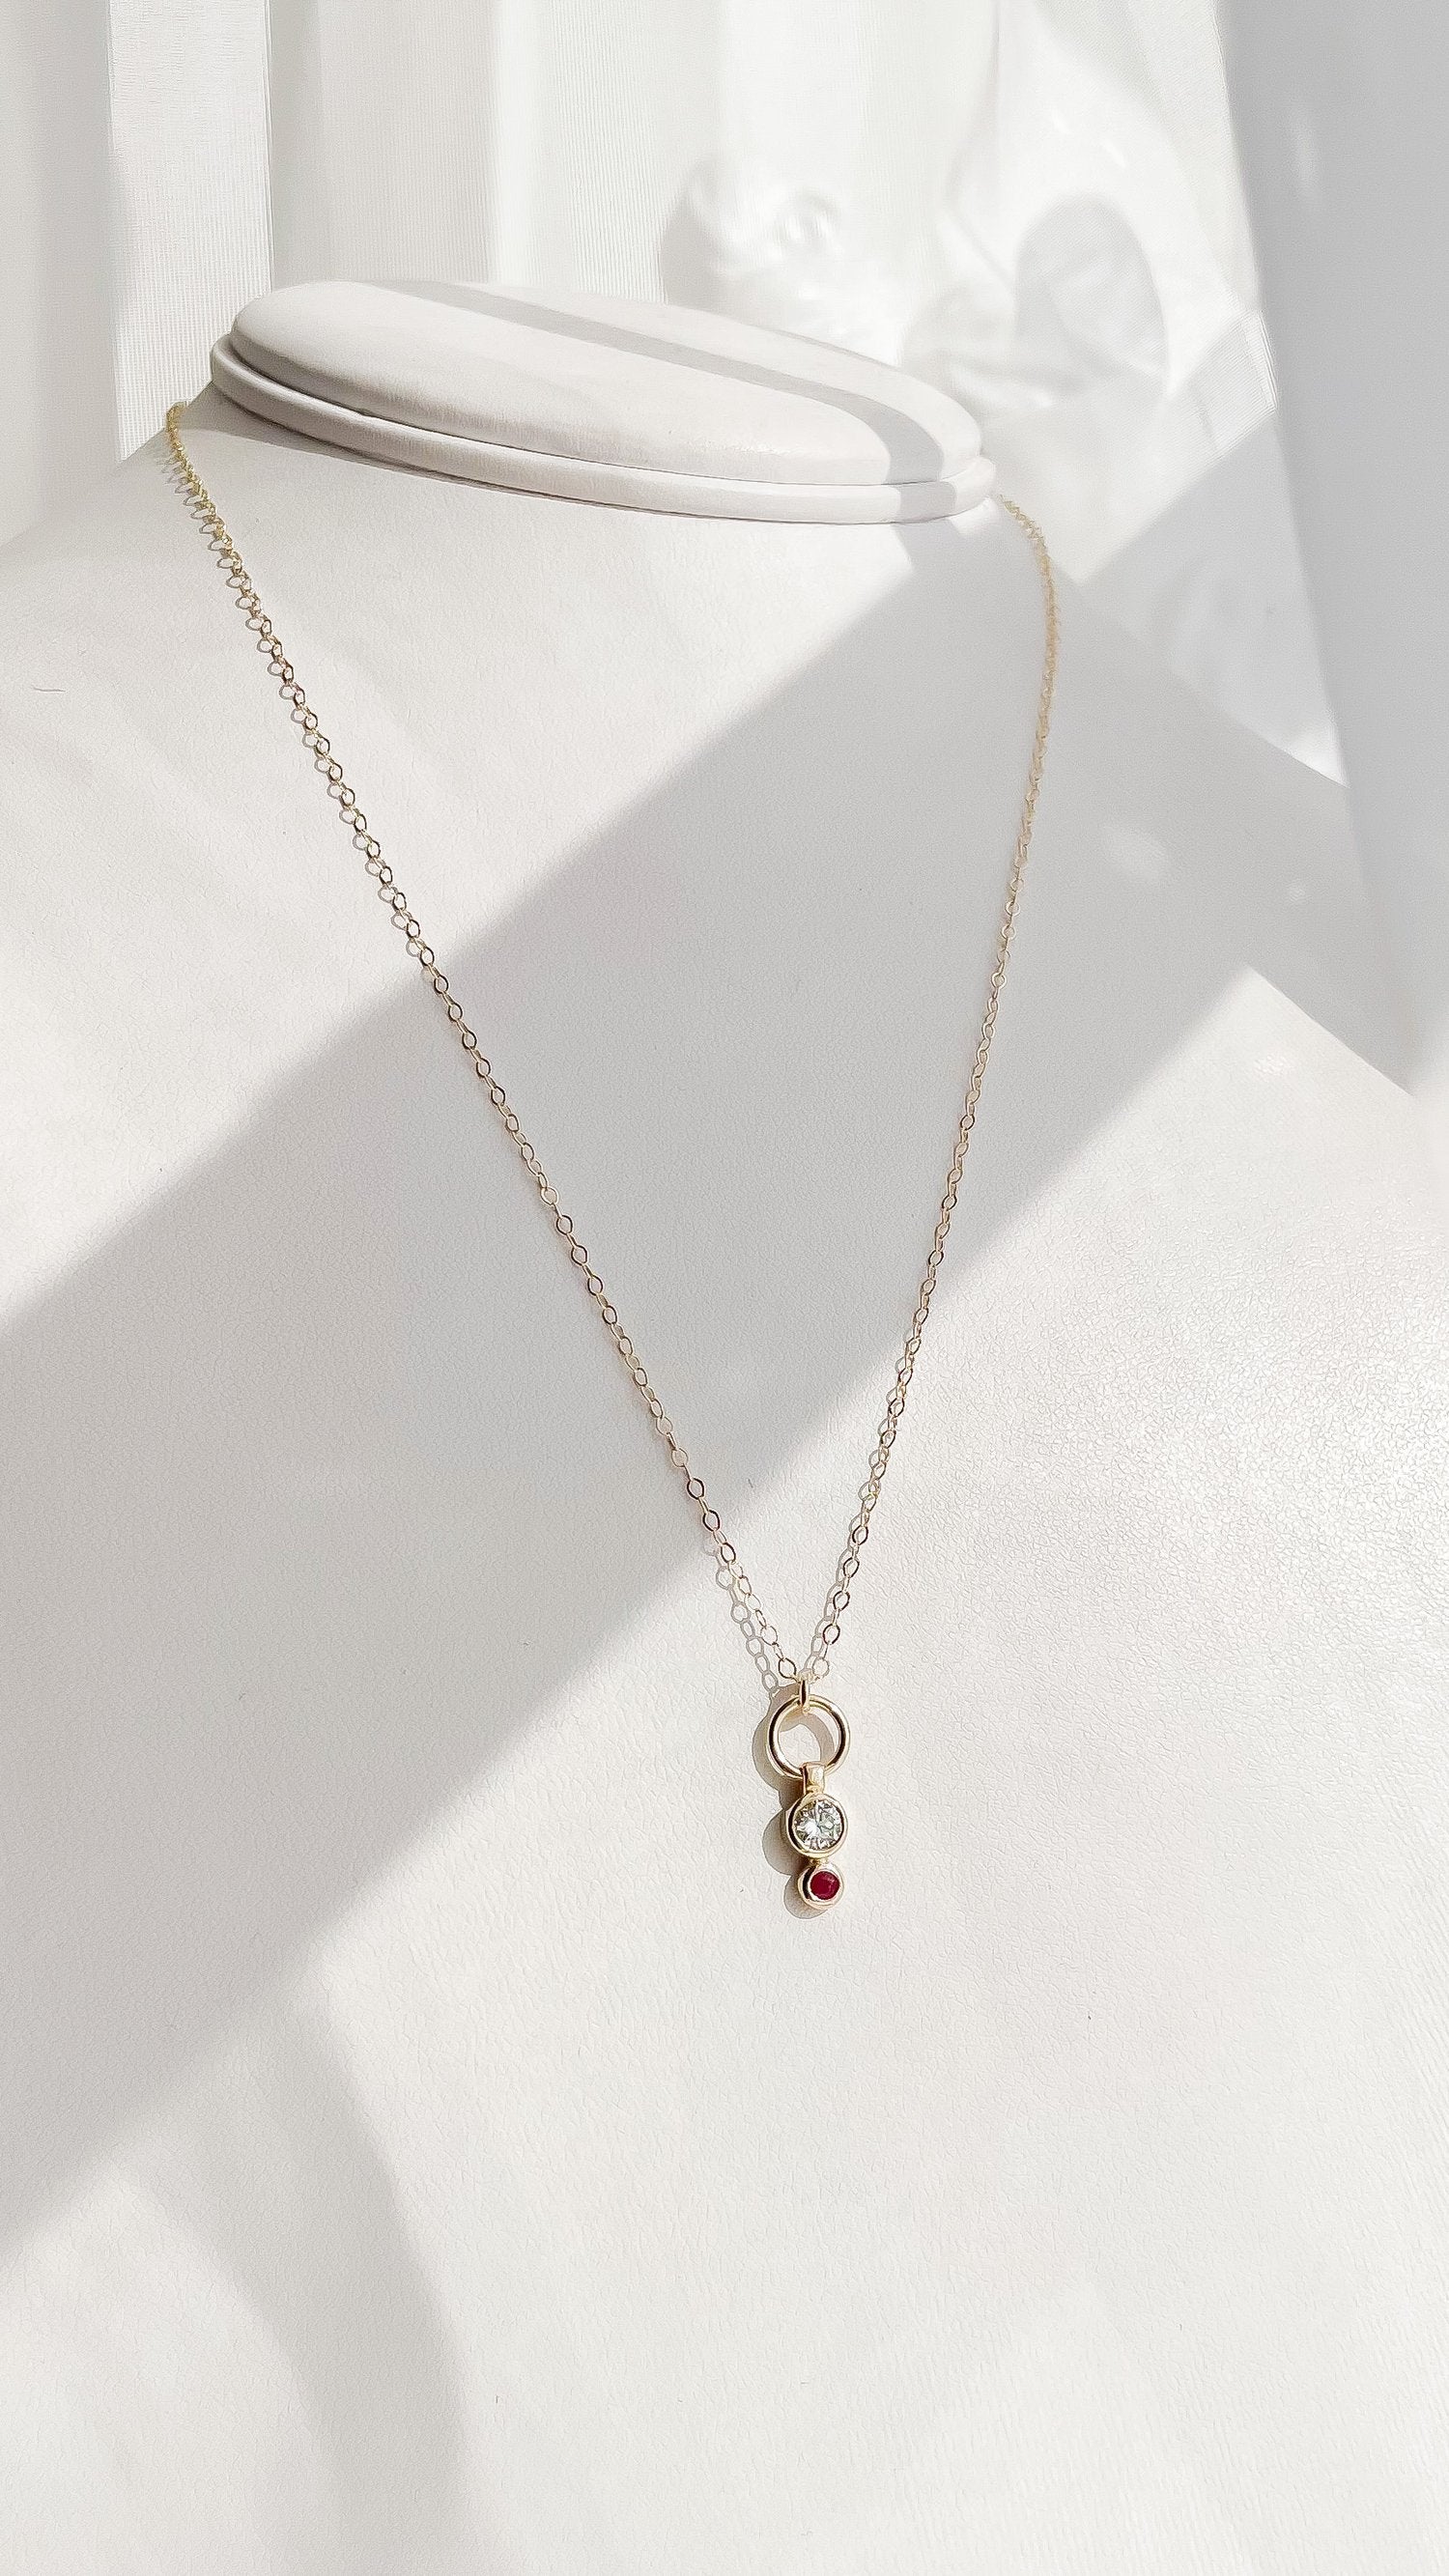 SUN & SELENE ruby and diamond necklace on form